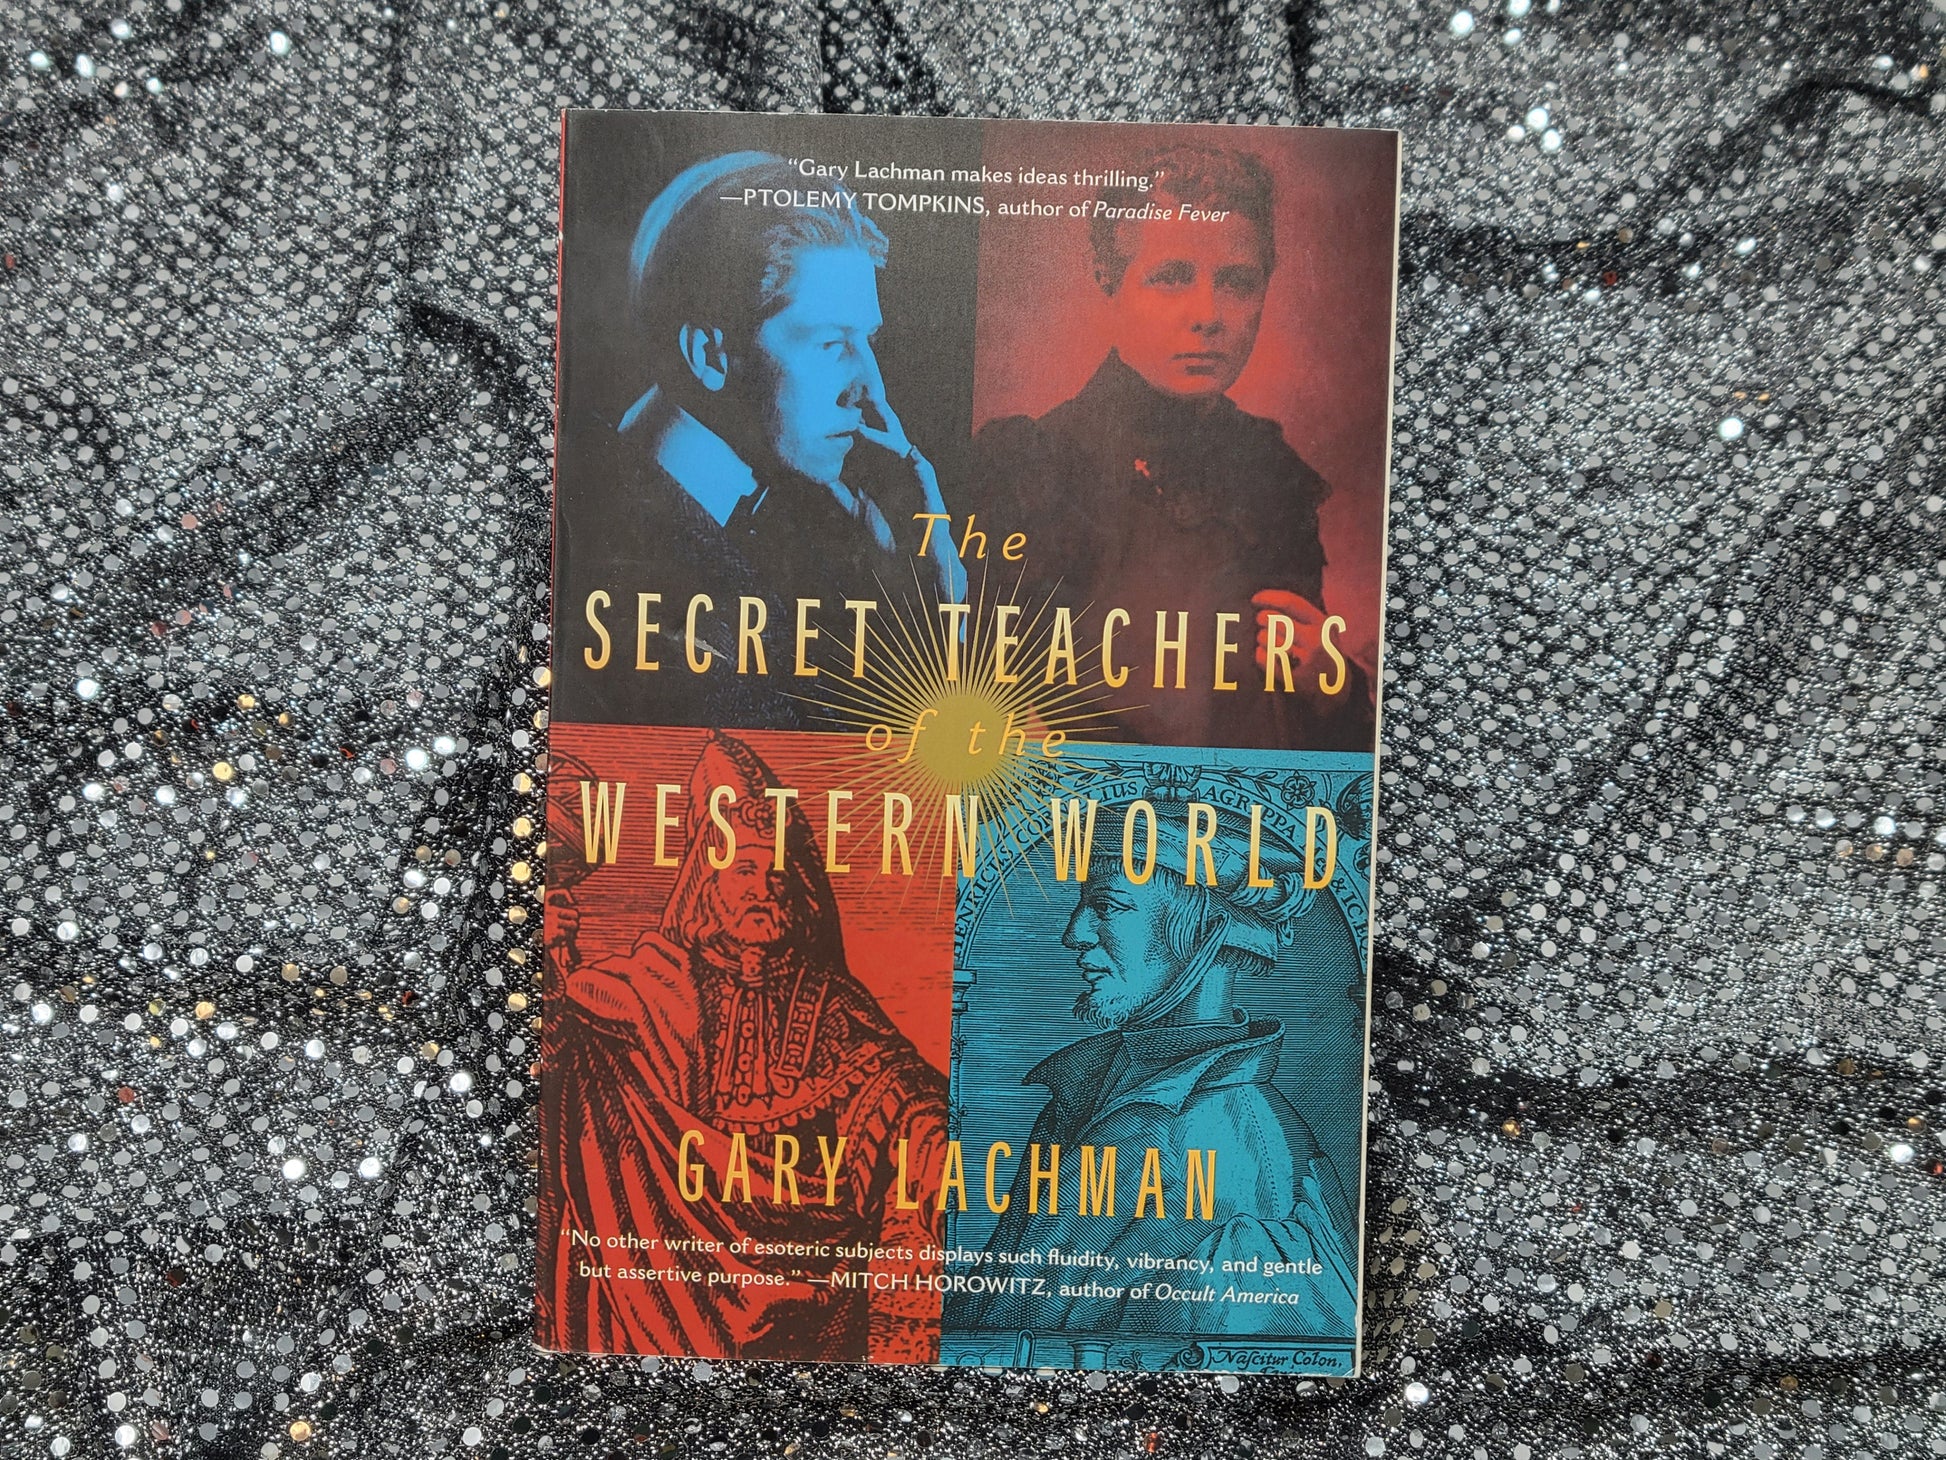 The Secret Teachers of the Western World - By Gary Lachman